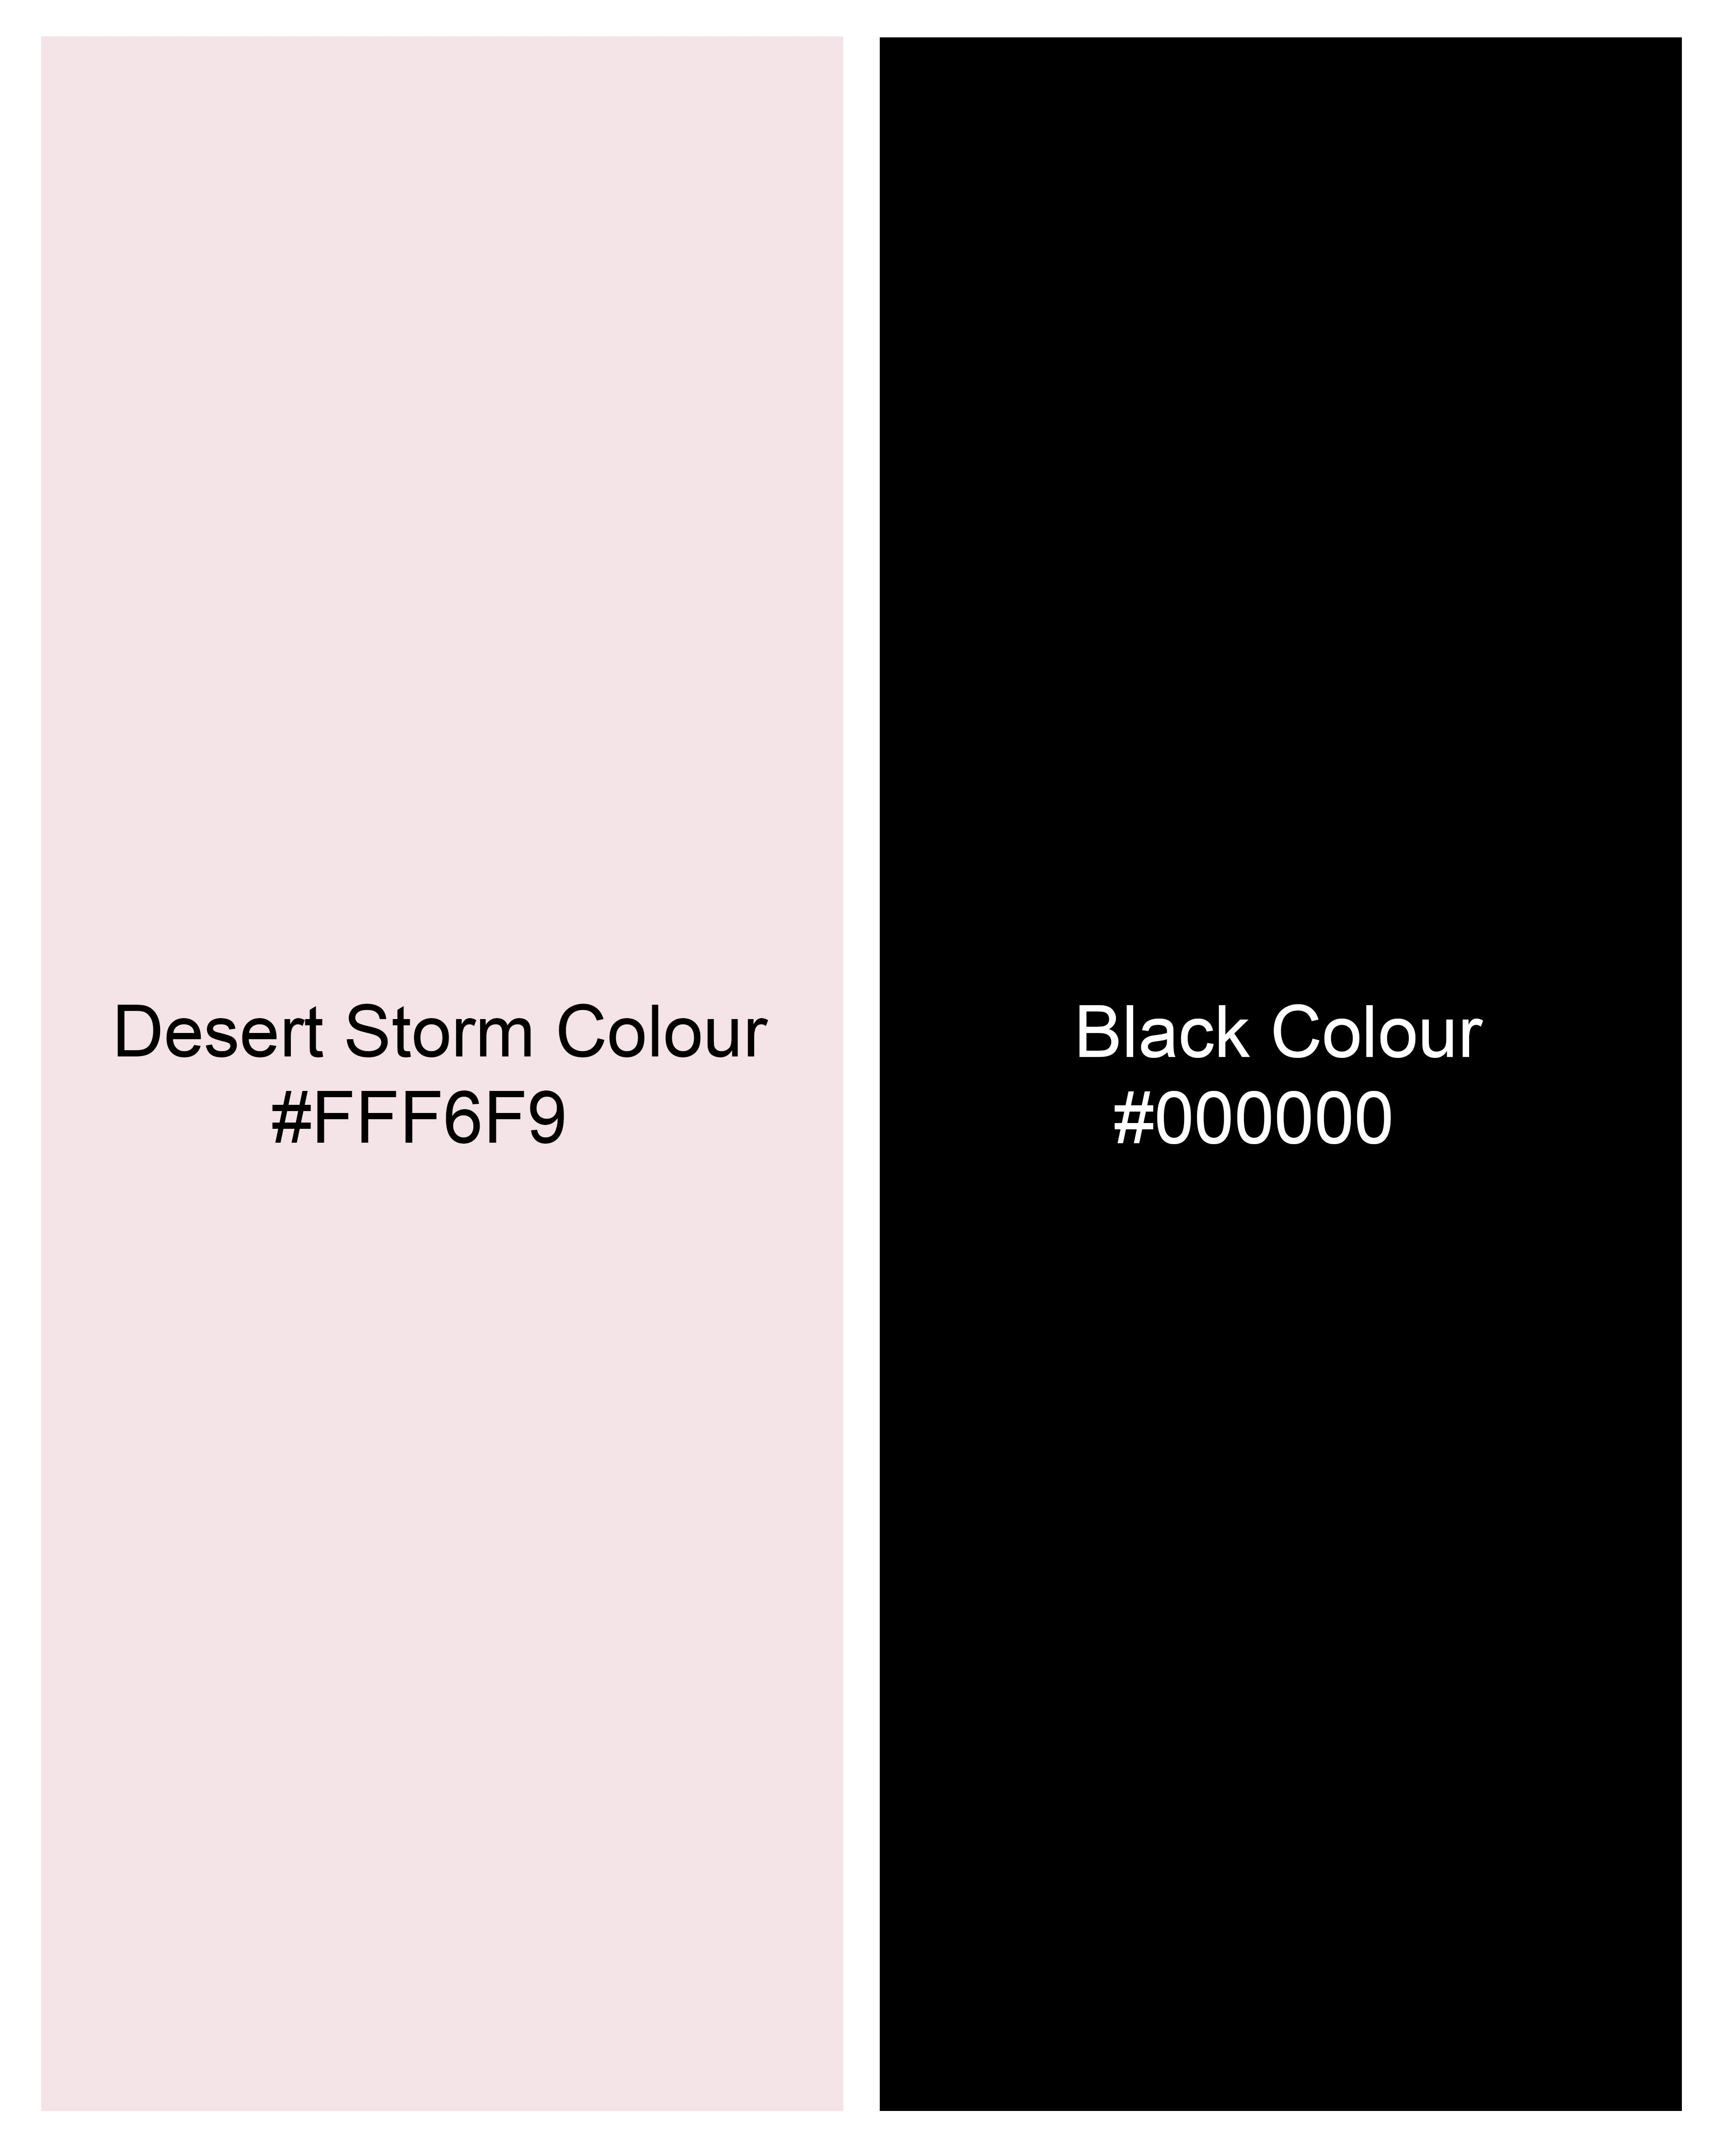 Desert Storm Peach Feather Textured Super Soft Premium Cotton Shirt 9734-BLK-38, 9734-BLK-H-38, 9734-BLK-39, 9734-BLK-H-39, 9734-BLK-40, 9734-BLK-H-40, 9734-BLK-42, 9734-BLK-H-42, 9734-BLK-44, 9734-BLK-H-44, 9734-BLK-46, 9734-BLK-H-46, 9734-BLK-48, 9734-BLK-H-48, 9734-BLK-50, 9734-BLK-H-50, 9734-BLK-52, 9734-BLK-H-52